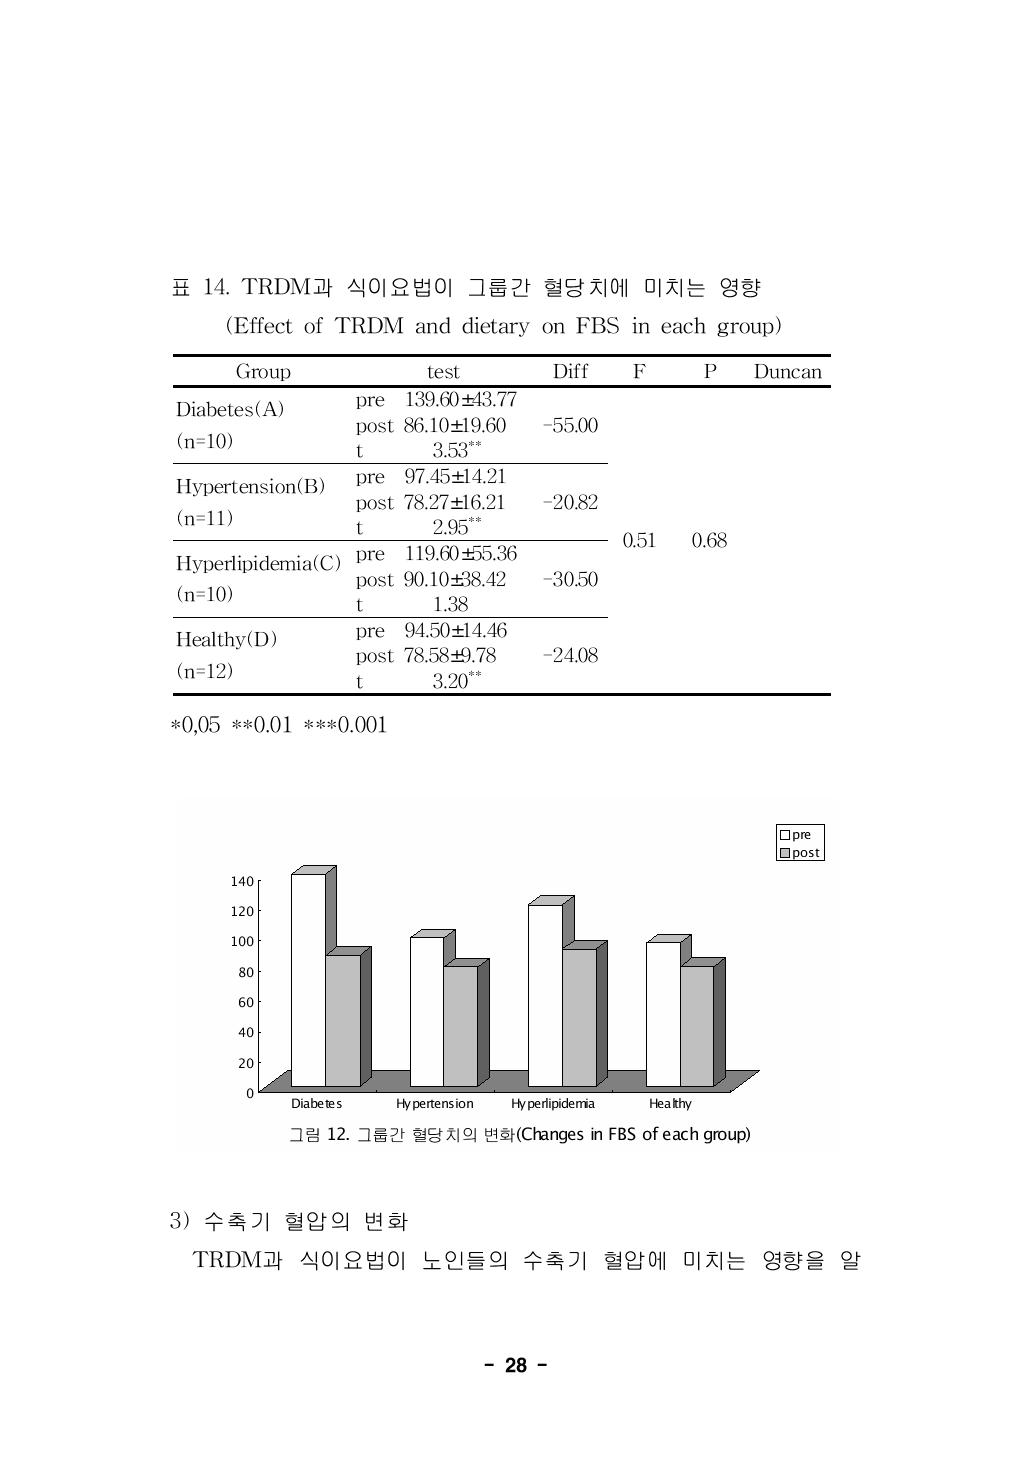 TRDM과 식이요법이 그룹간 혈당치에 미치는 영향(Effect of TRDM and dietary on FBS in each group)